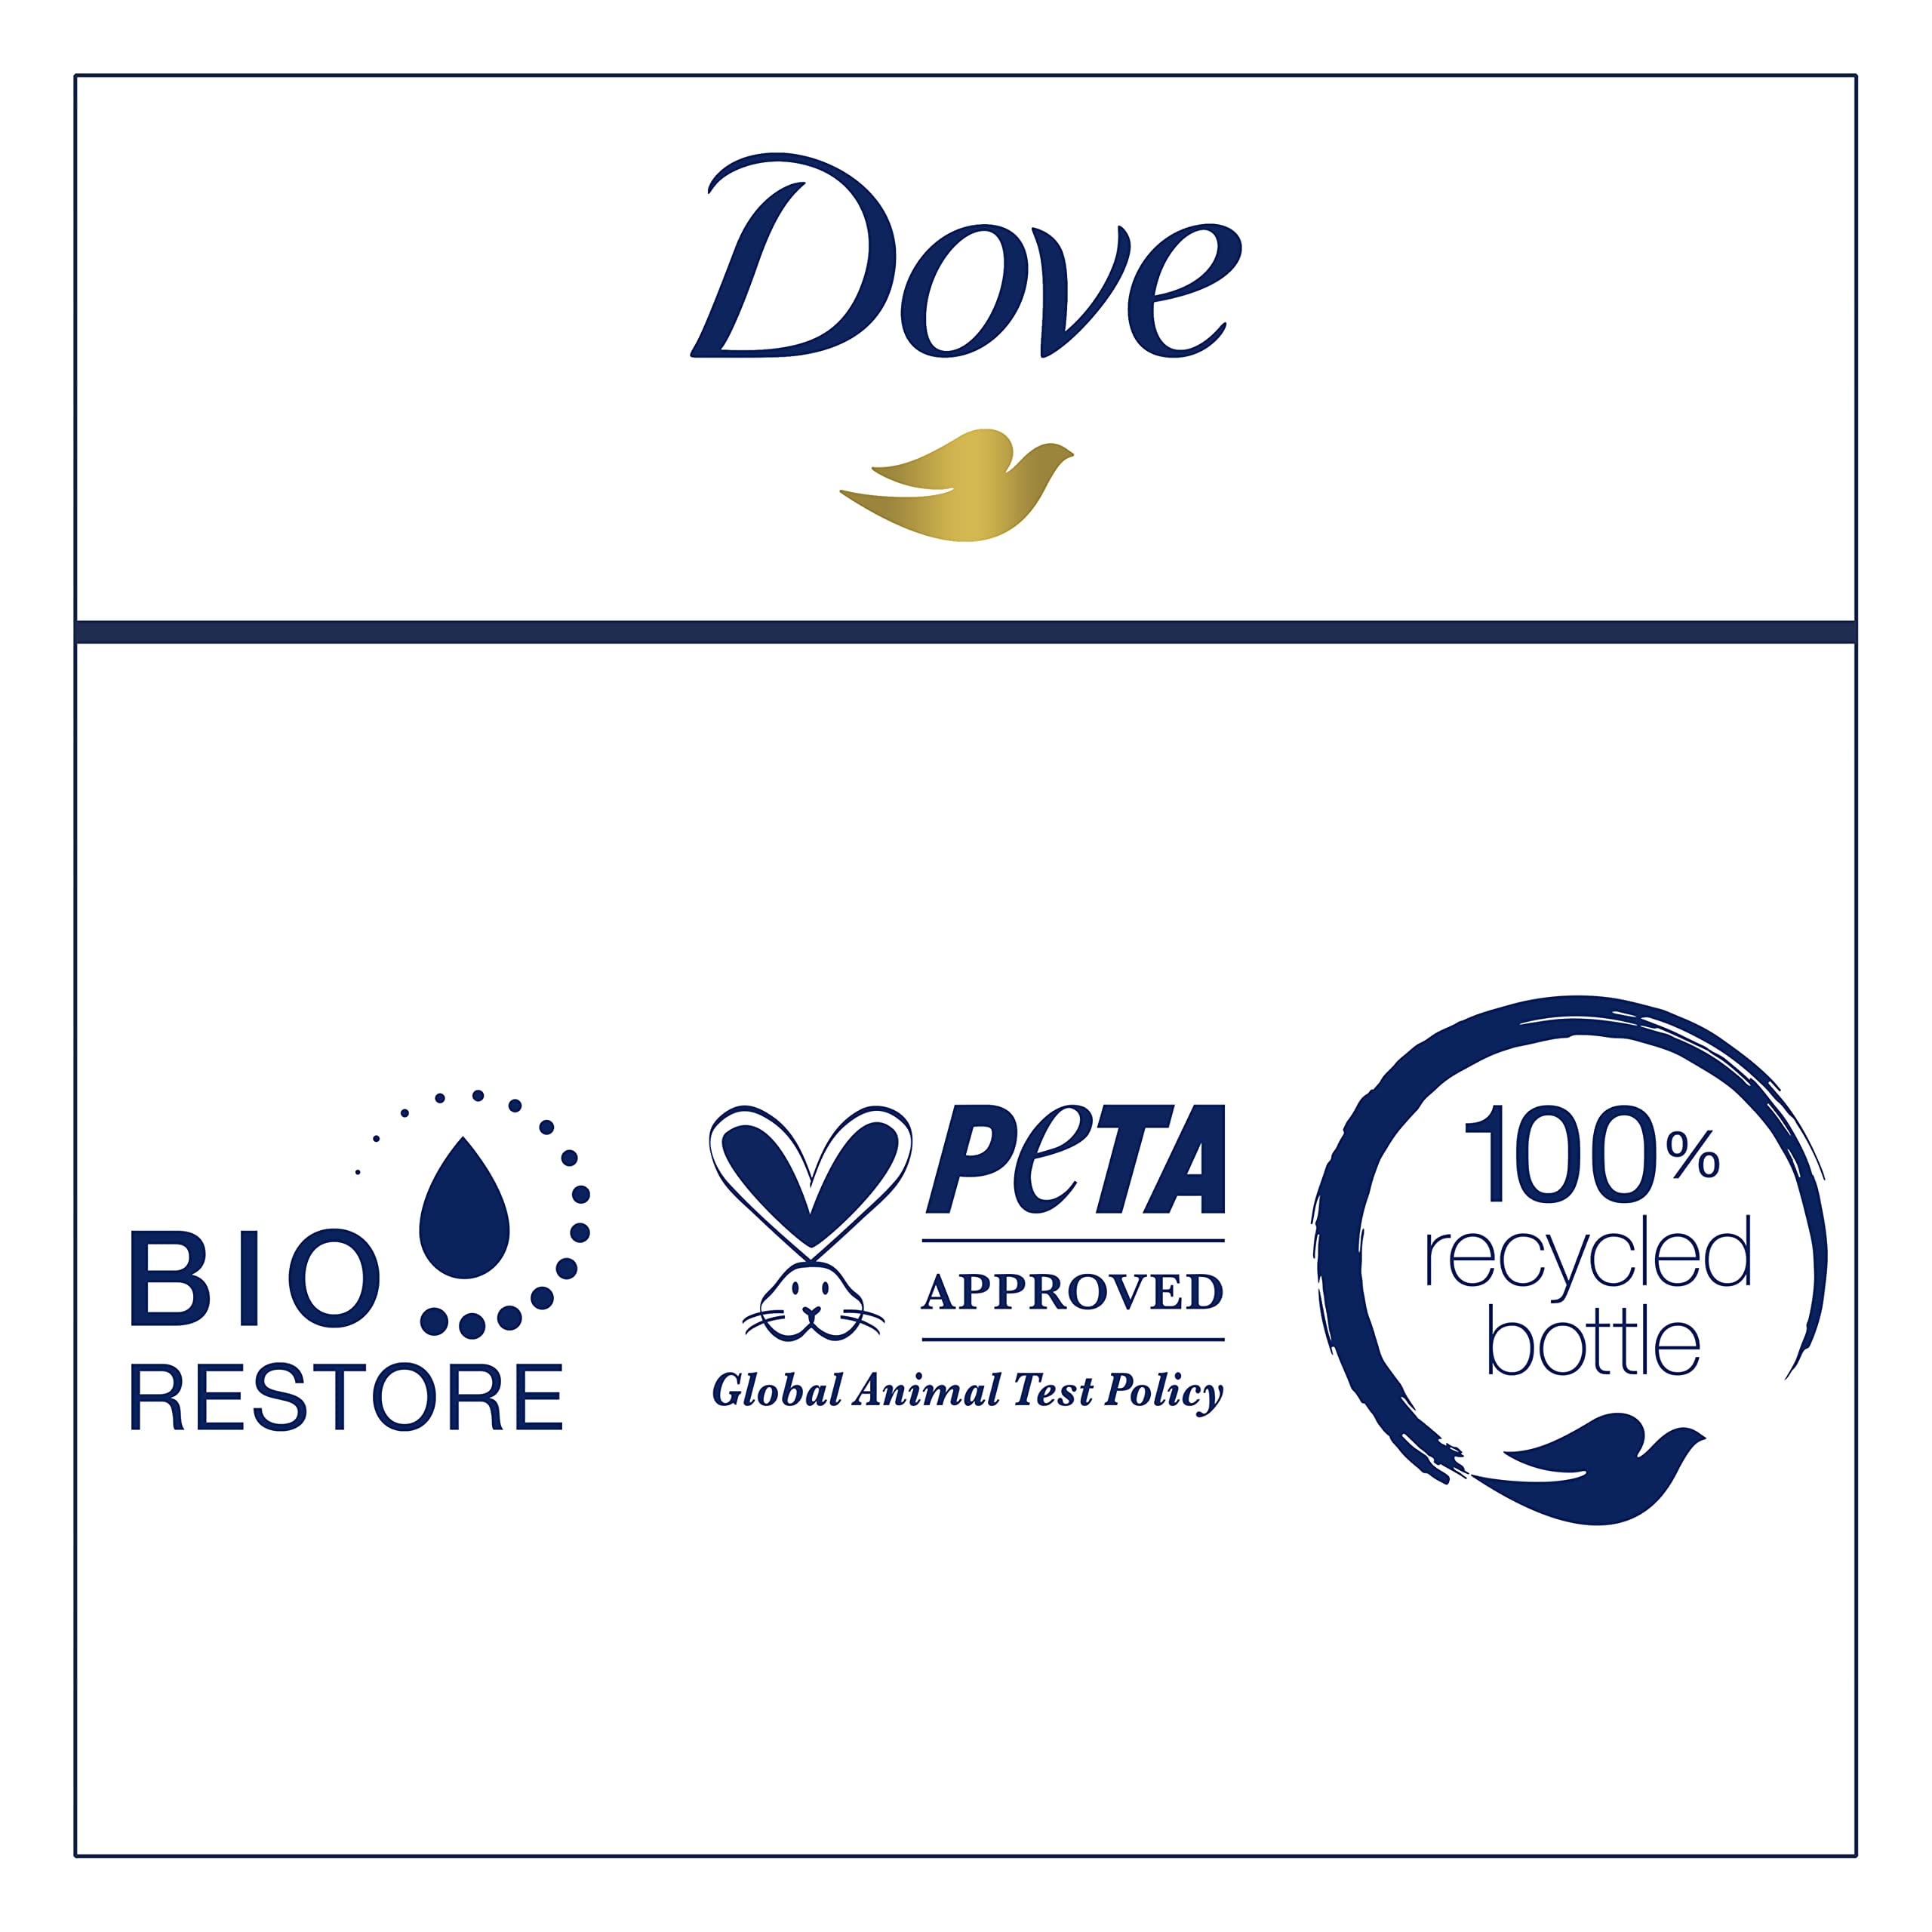 Dove Conditioner Intensive Repair w/Pump 4 count for Damaged Hair Conditioner with Bio-Restore Complex 31 oz